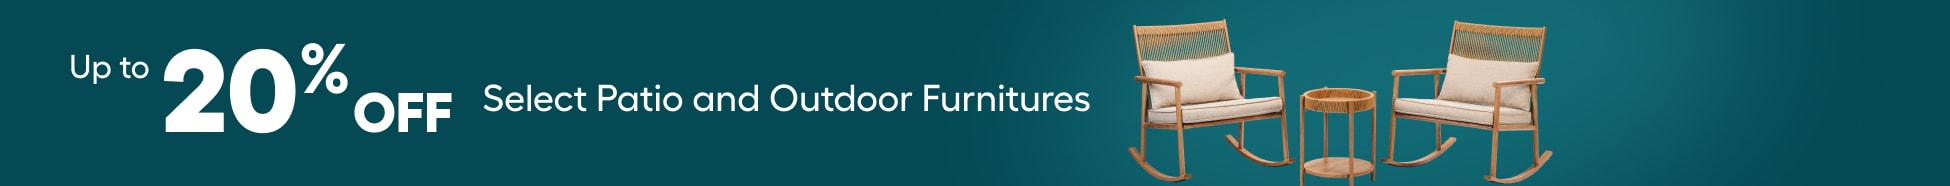 Patio & outdoor furniture promo